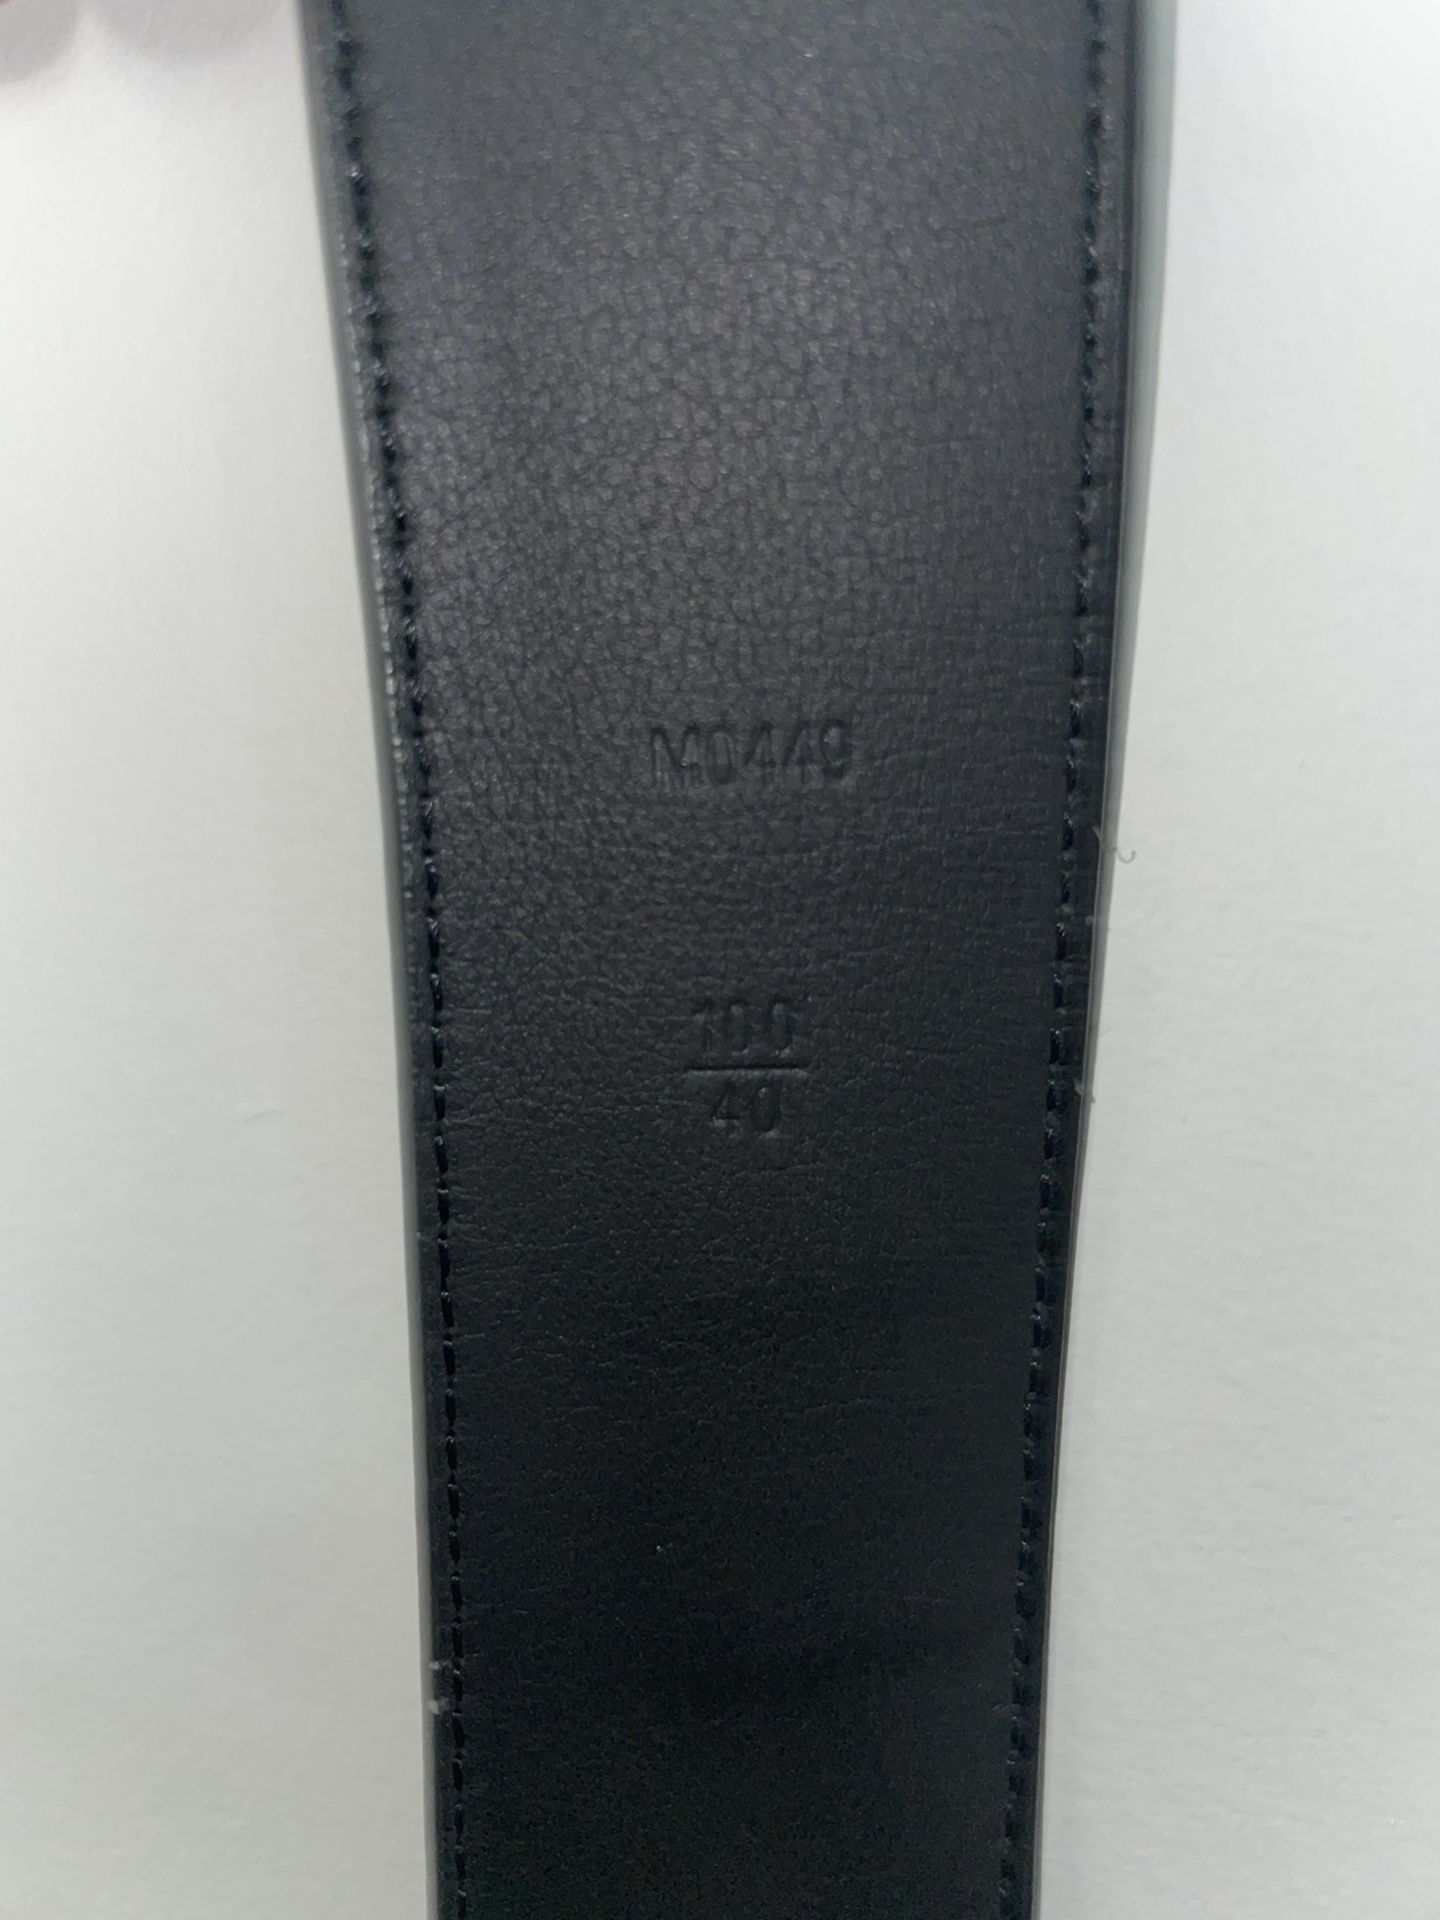 Louis Vuitton Initials LV Belt Matte Black for Sale in San Jose, CA -  OfferUp